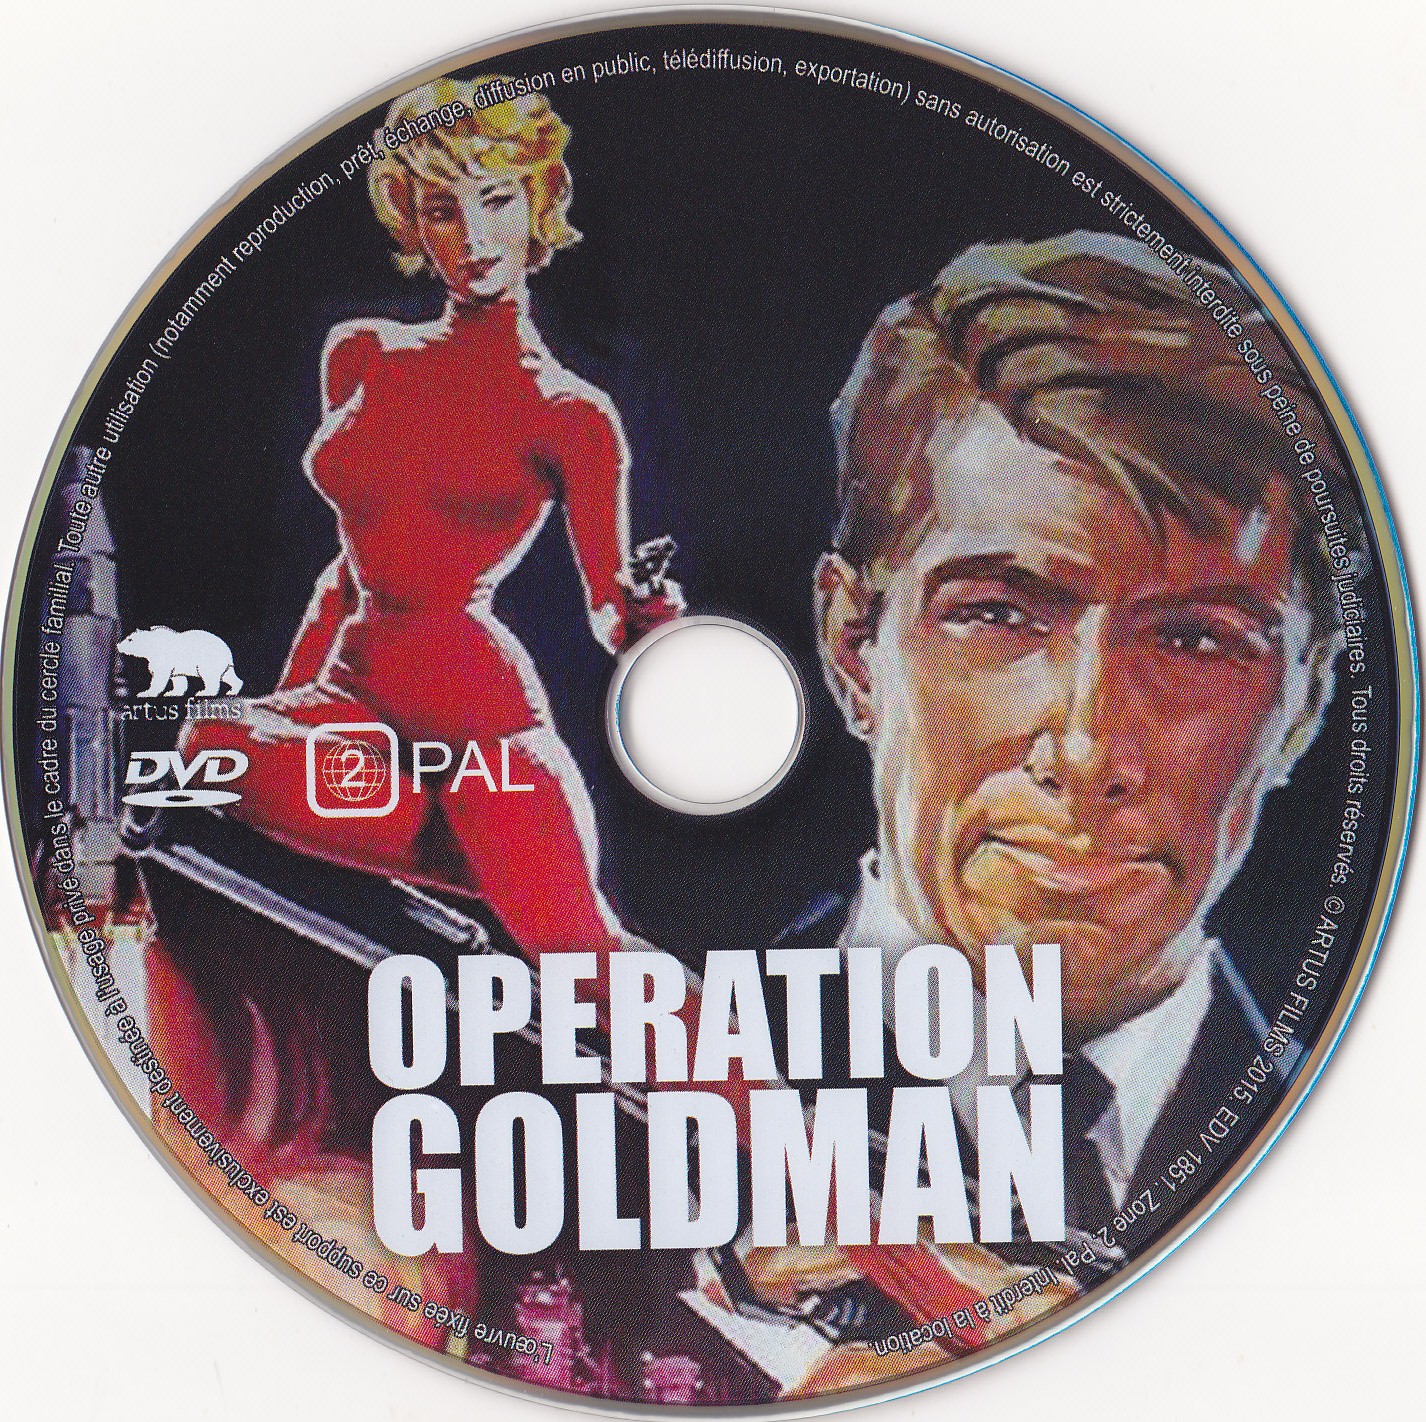 Opration Goldman